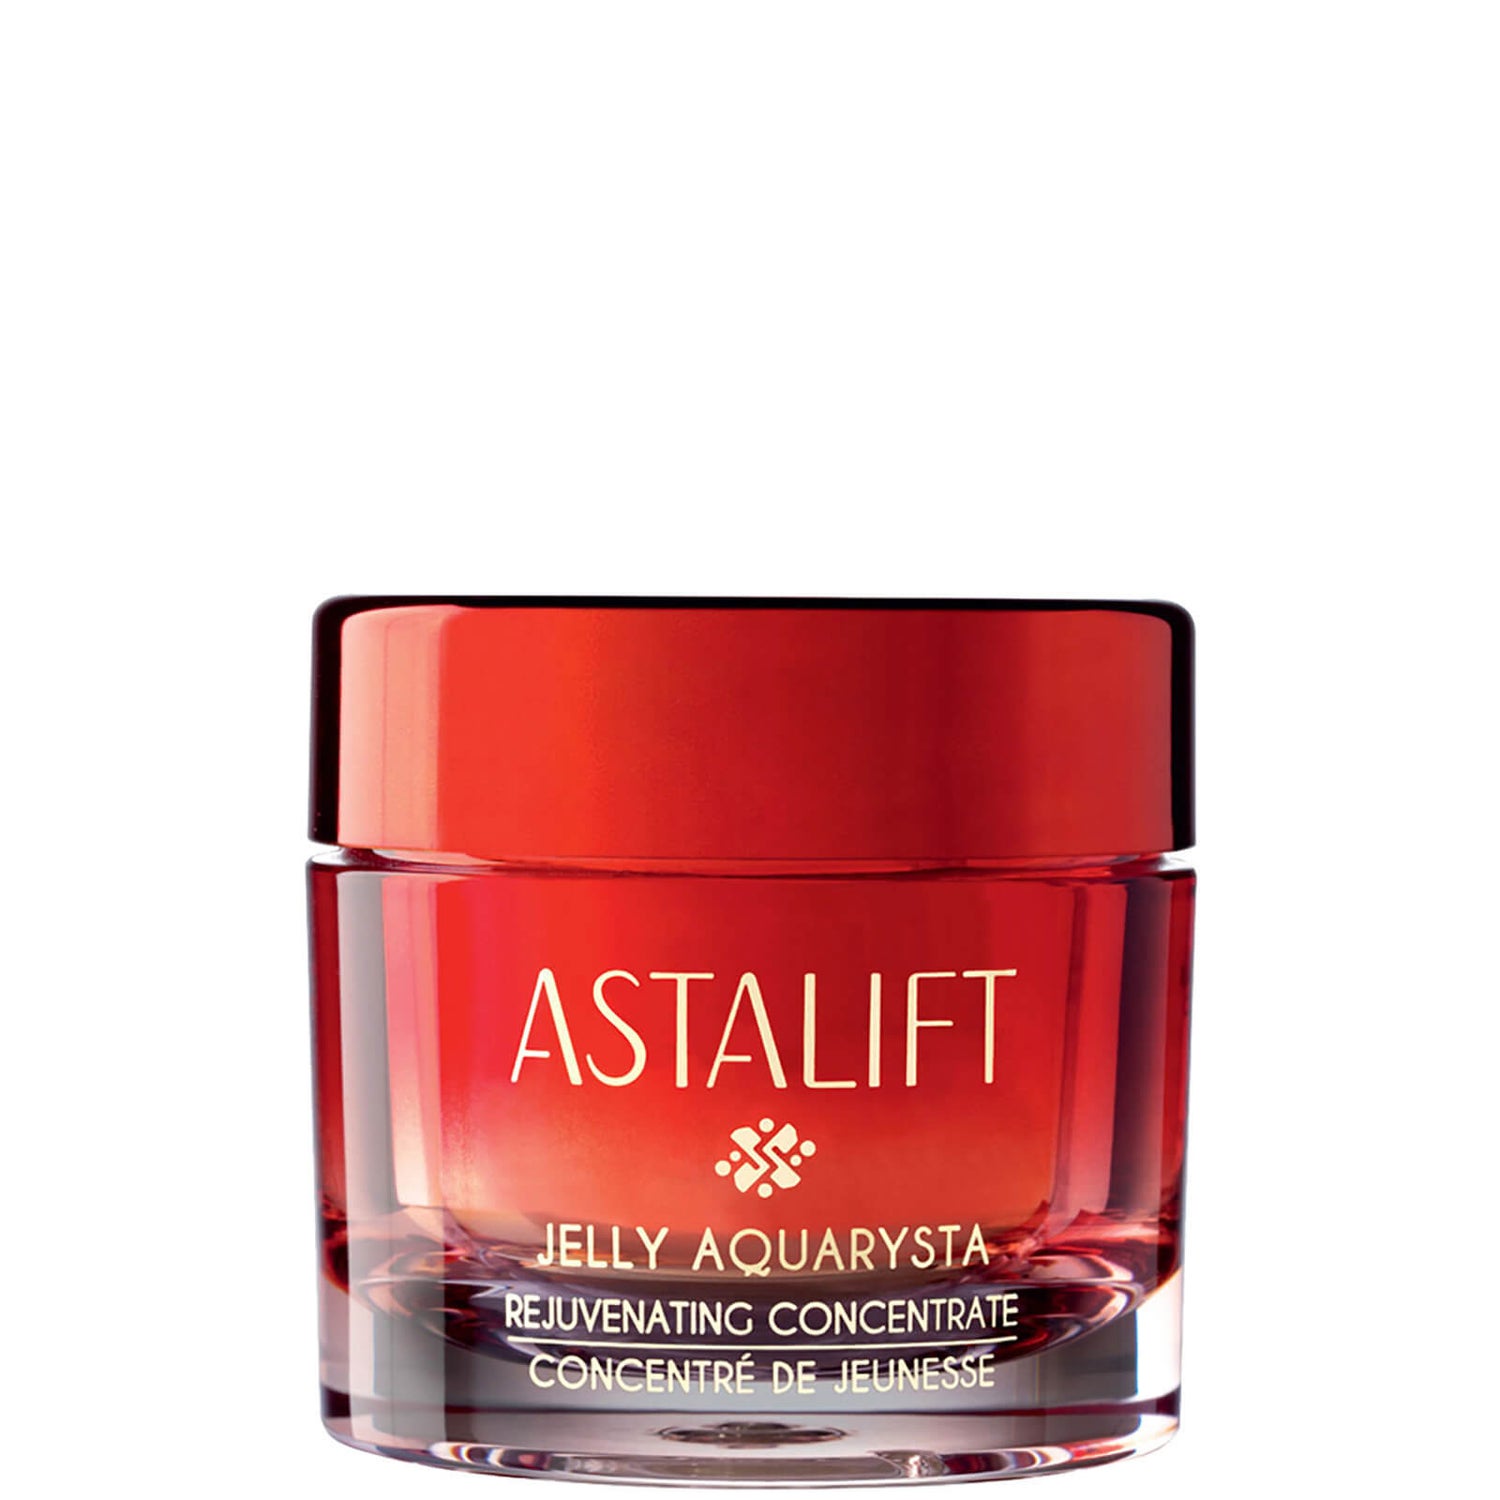 Astalift Jelly Aquarysta Rejuvenating Concentrate Serum (40 g)